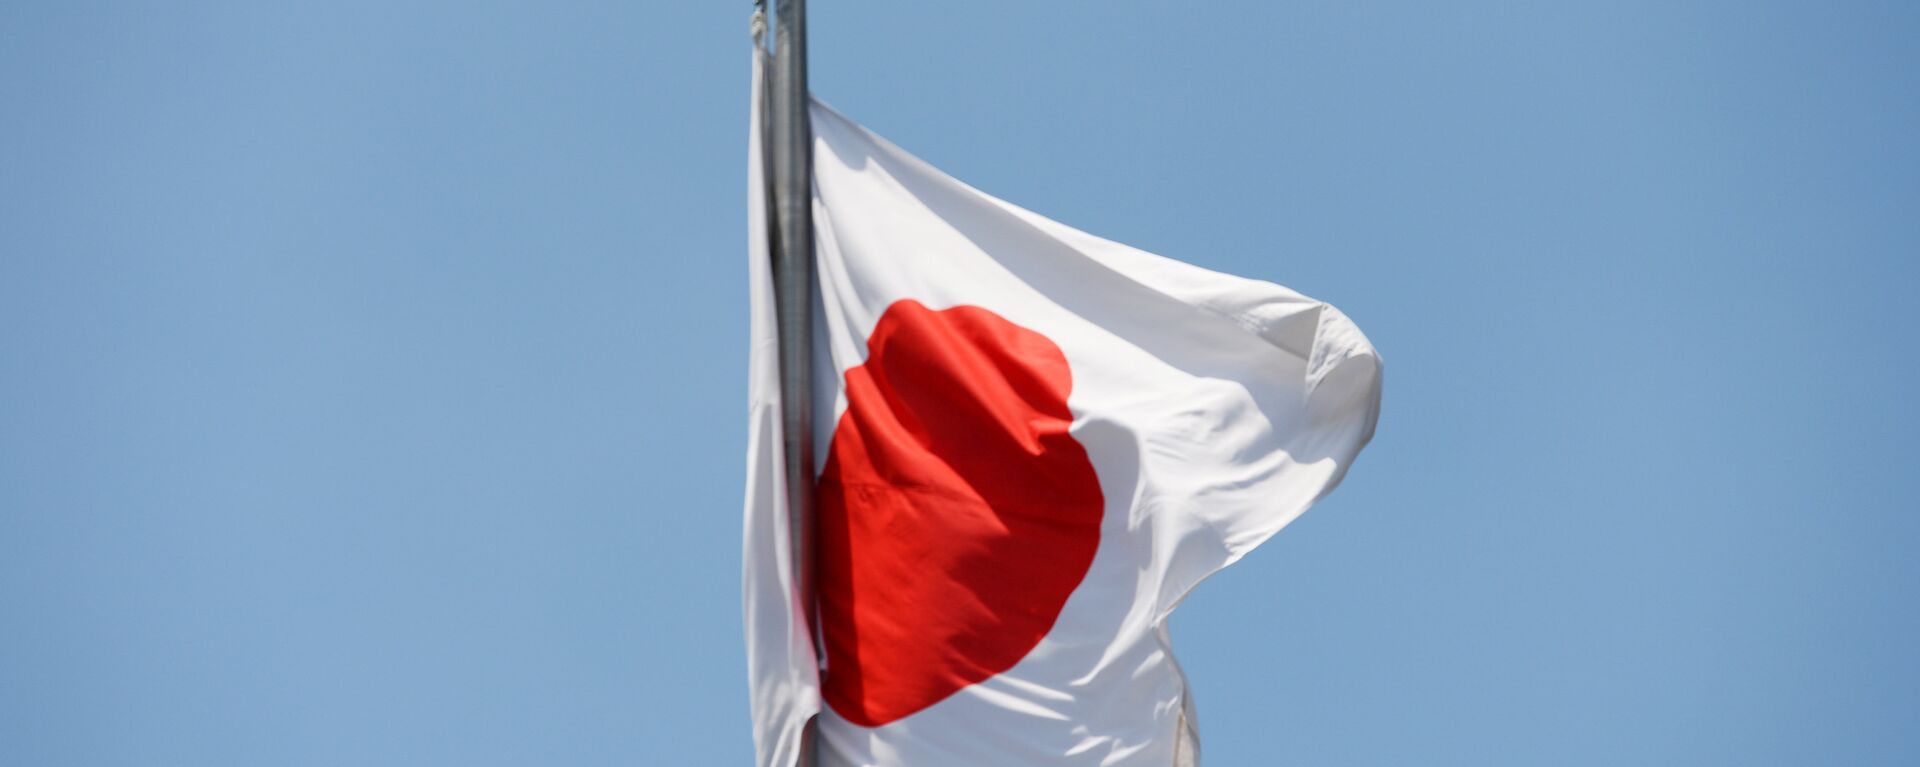 Bandera de Japón  - Sputnik Mundo, 1920, 04.12.2019